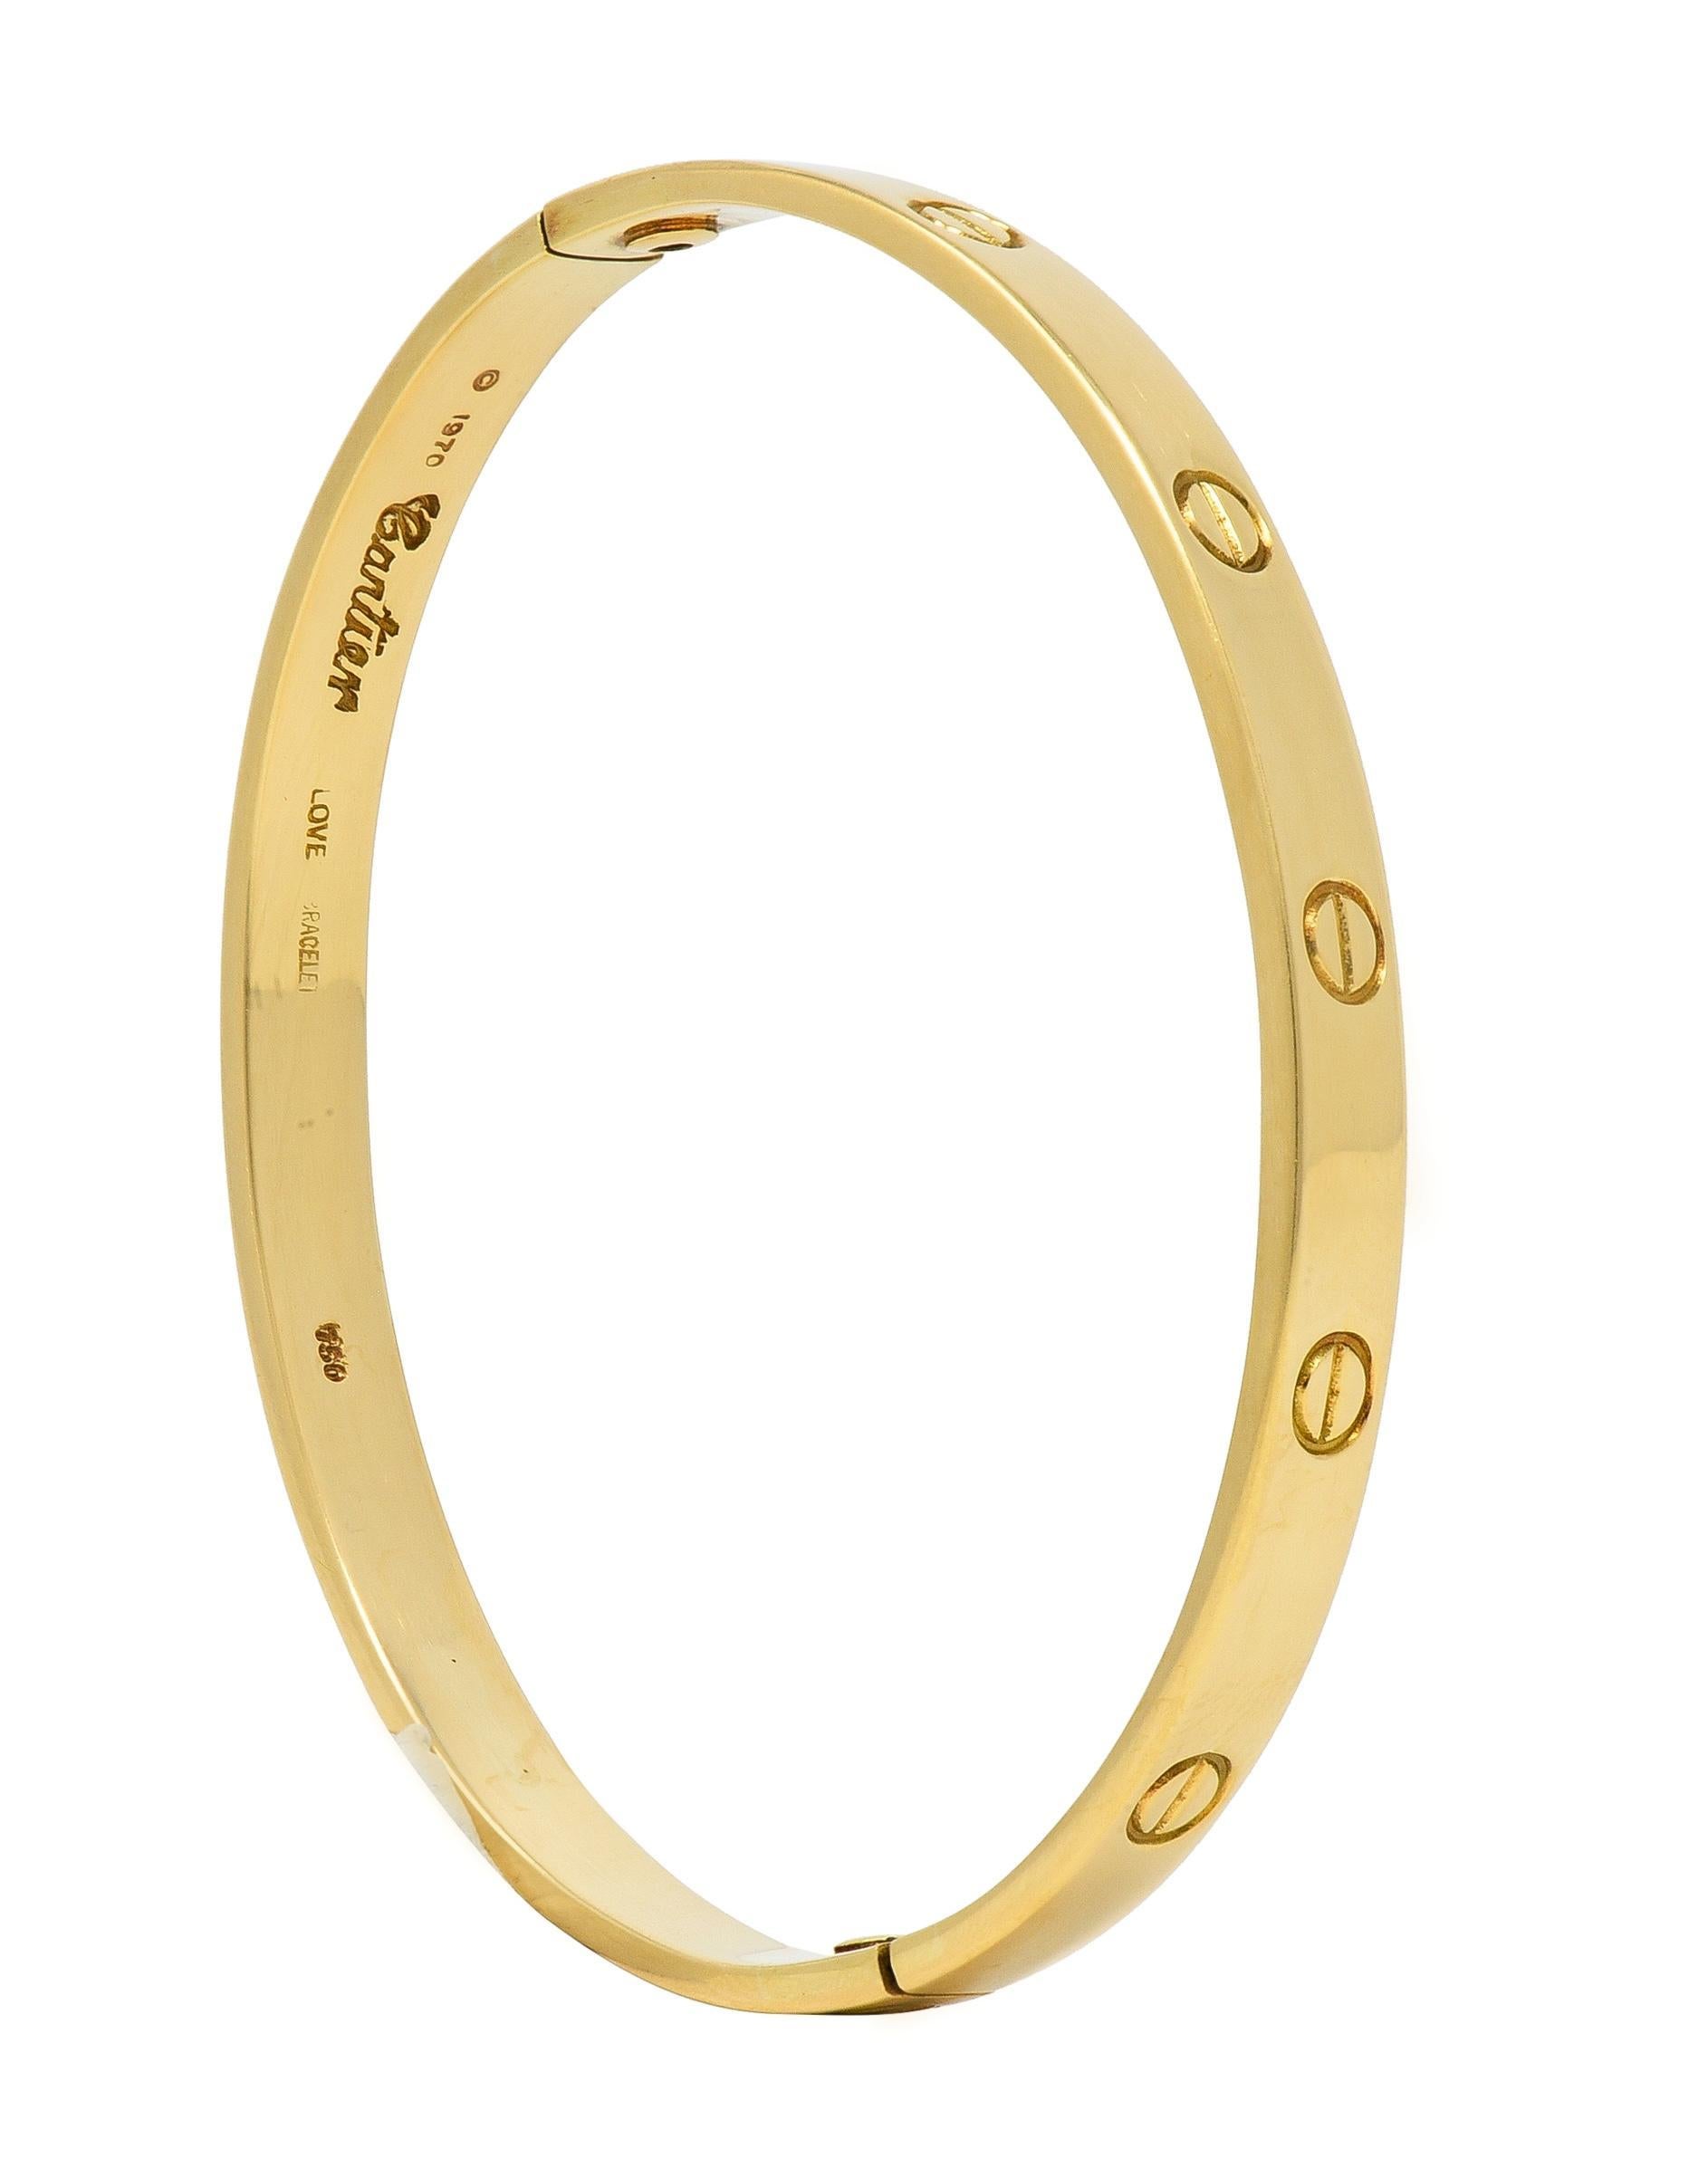 Cartier Aldo Cipullo 1970s 18 Karat Yellow Gold Love Bangle Bracelet For Sale 7